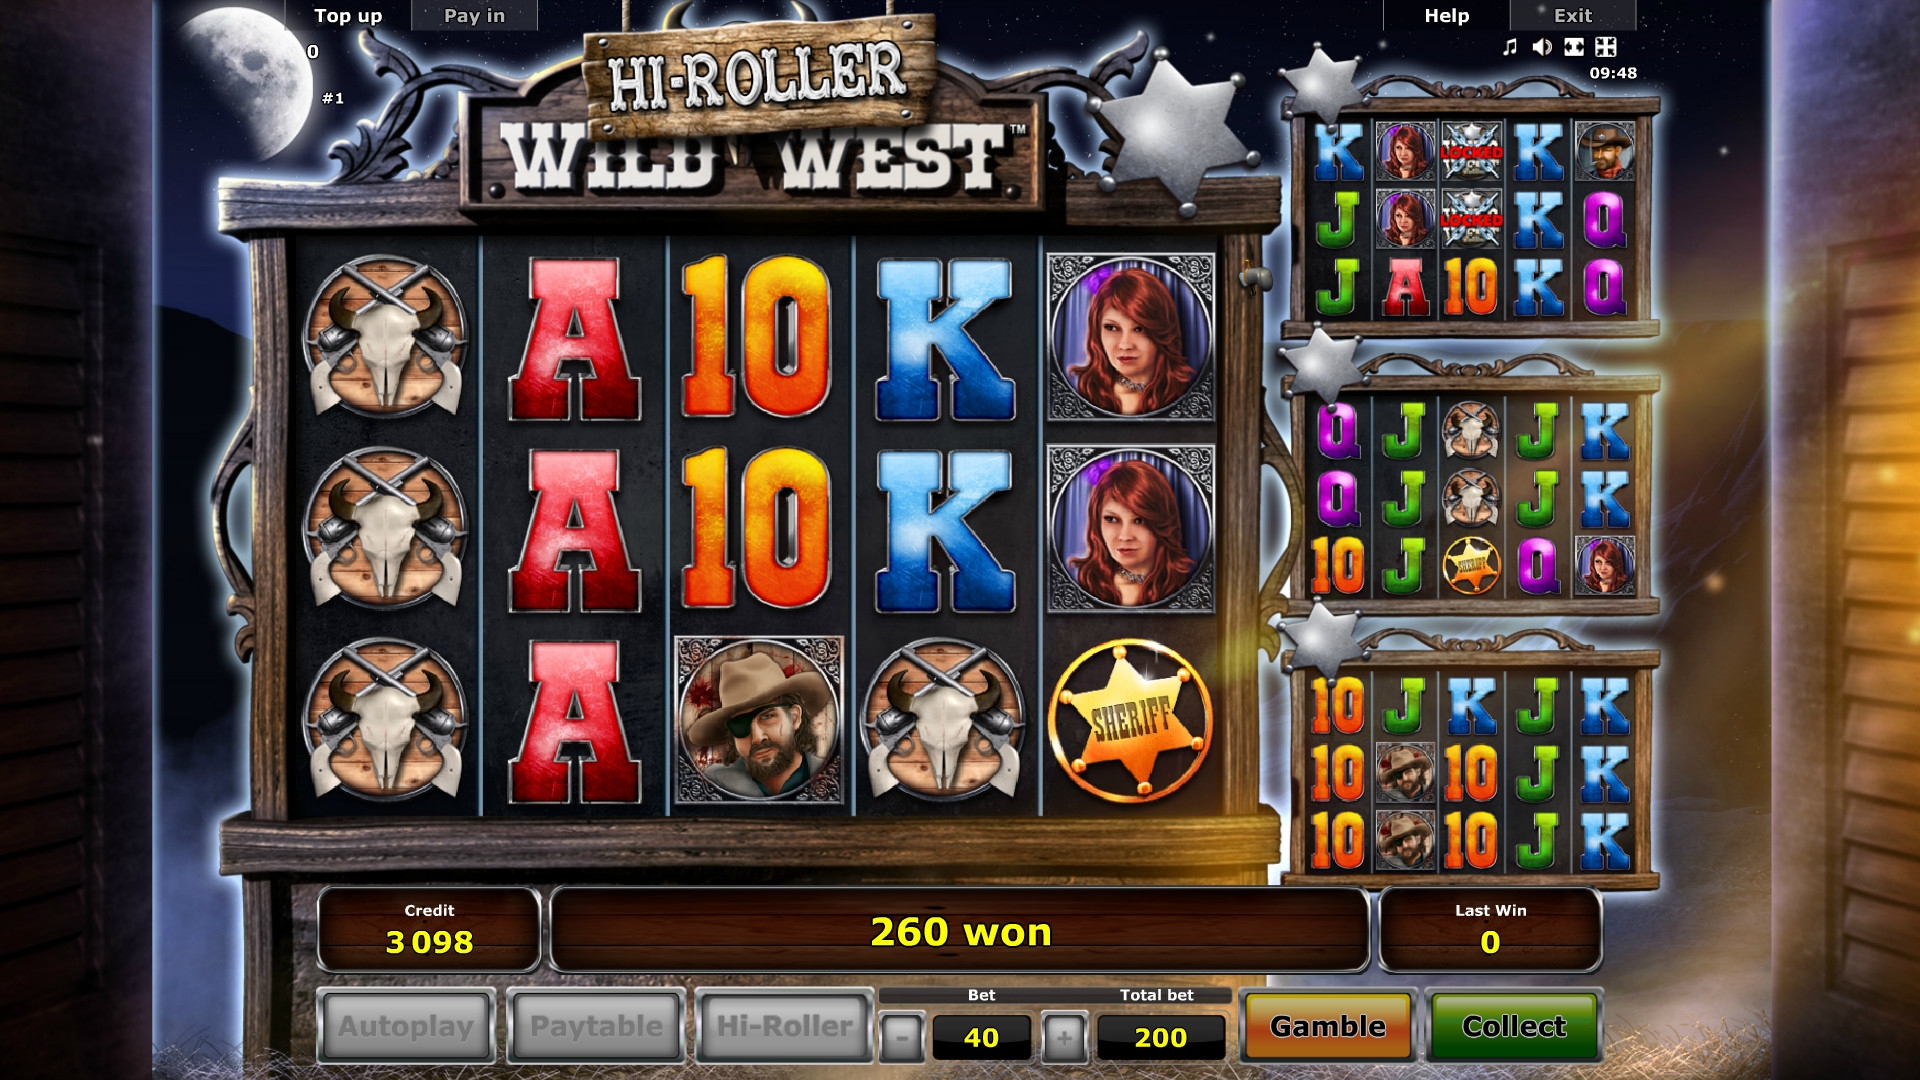 Wild West Hi-Roller (Wild West Hi-Roller) from category Slots